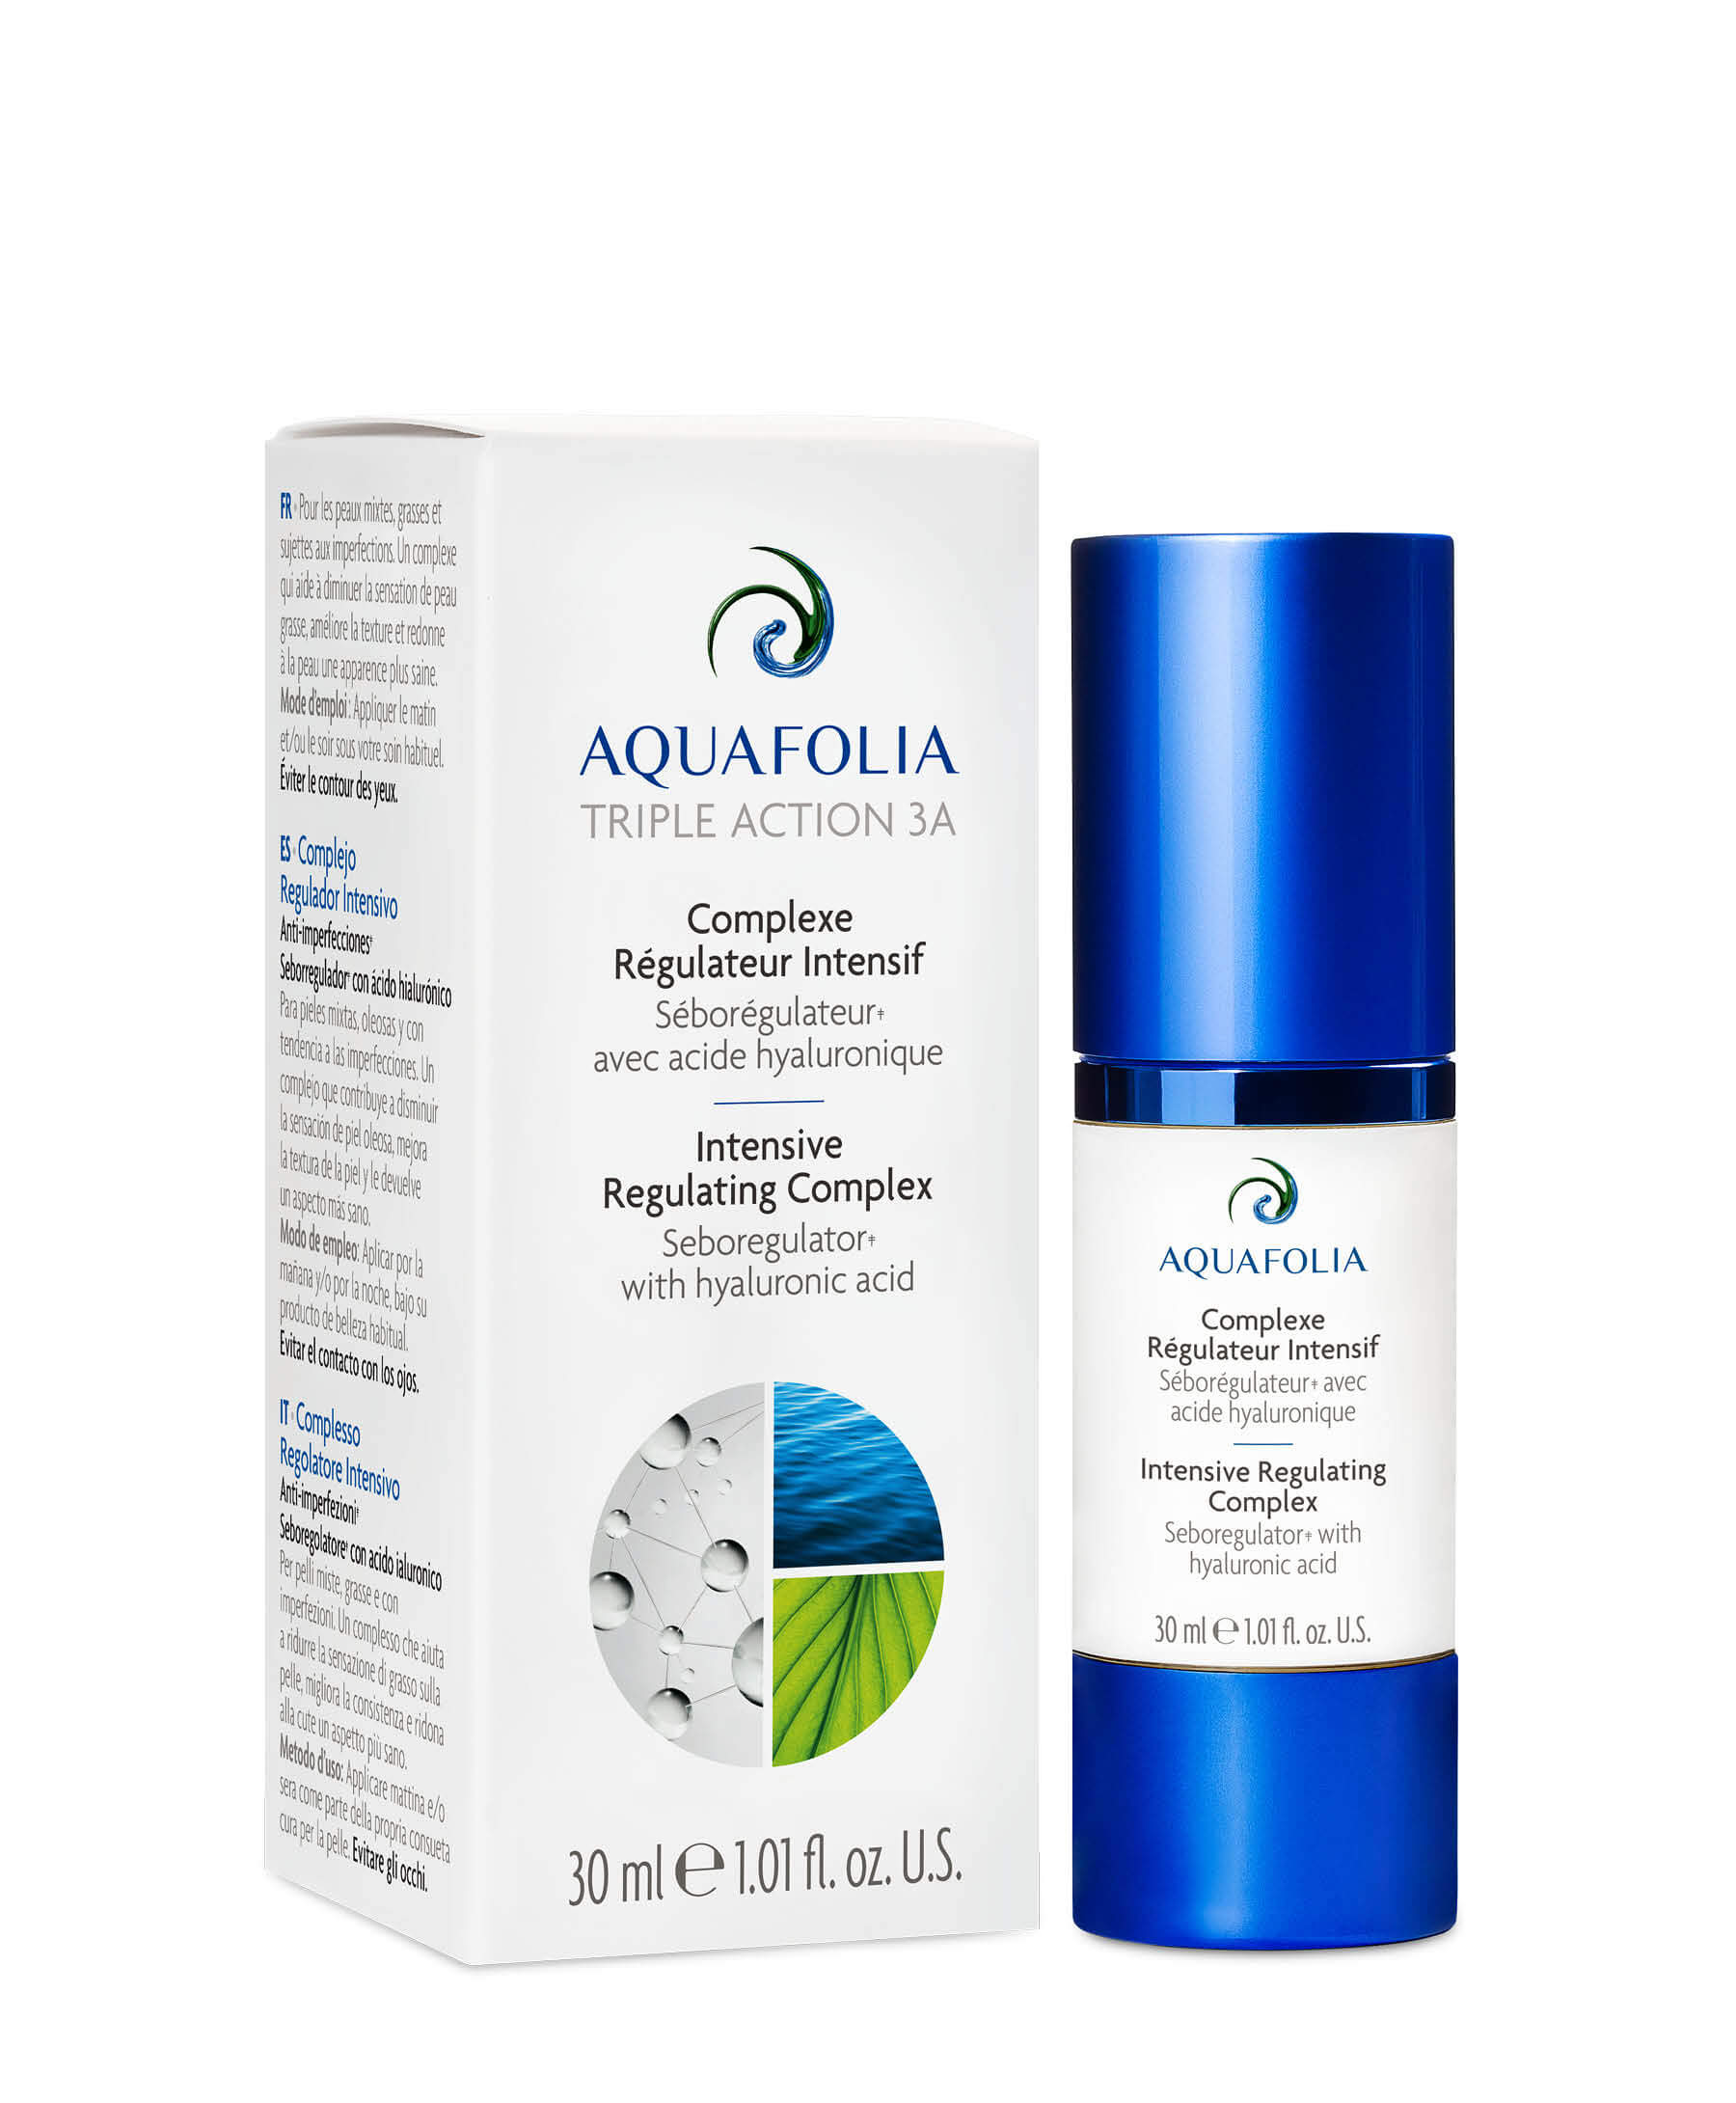 Aquafolia Intensive Regulating complex hyaluronic acid product image